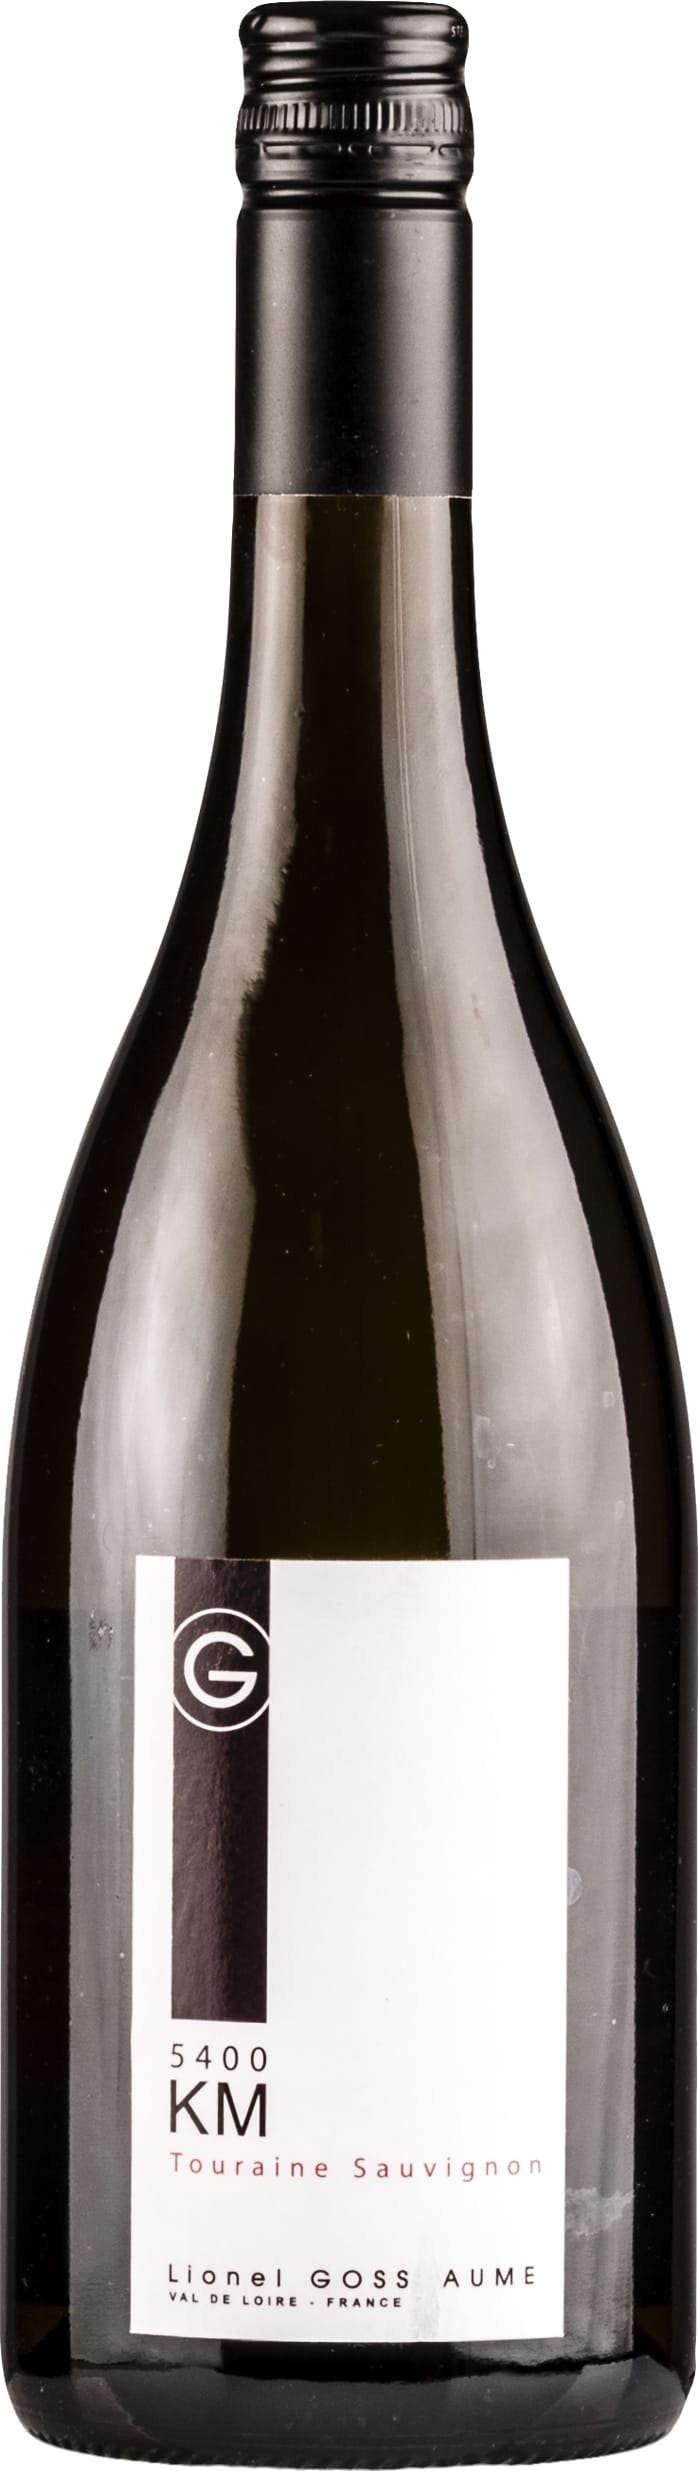 Lionel Gosseaume Touraine Sauvignon Blanc 2022 75cl - Buy Lionel Gosseaume Wines from GREAT WINES DIRECT wine shop